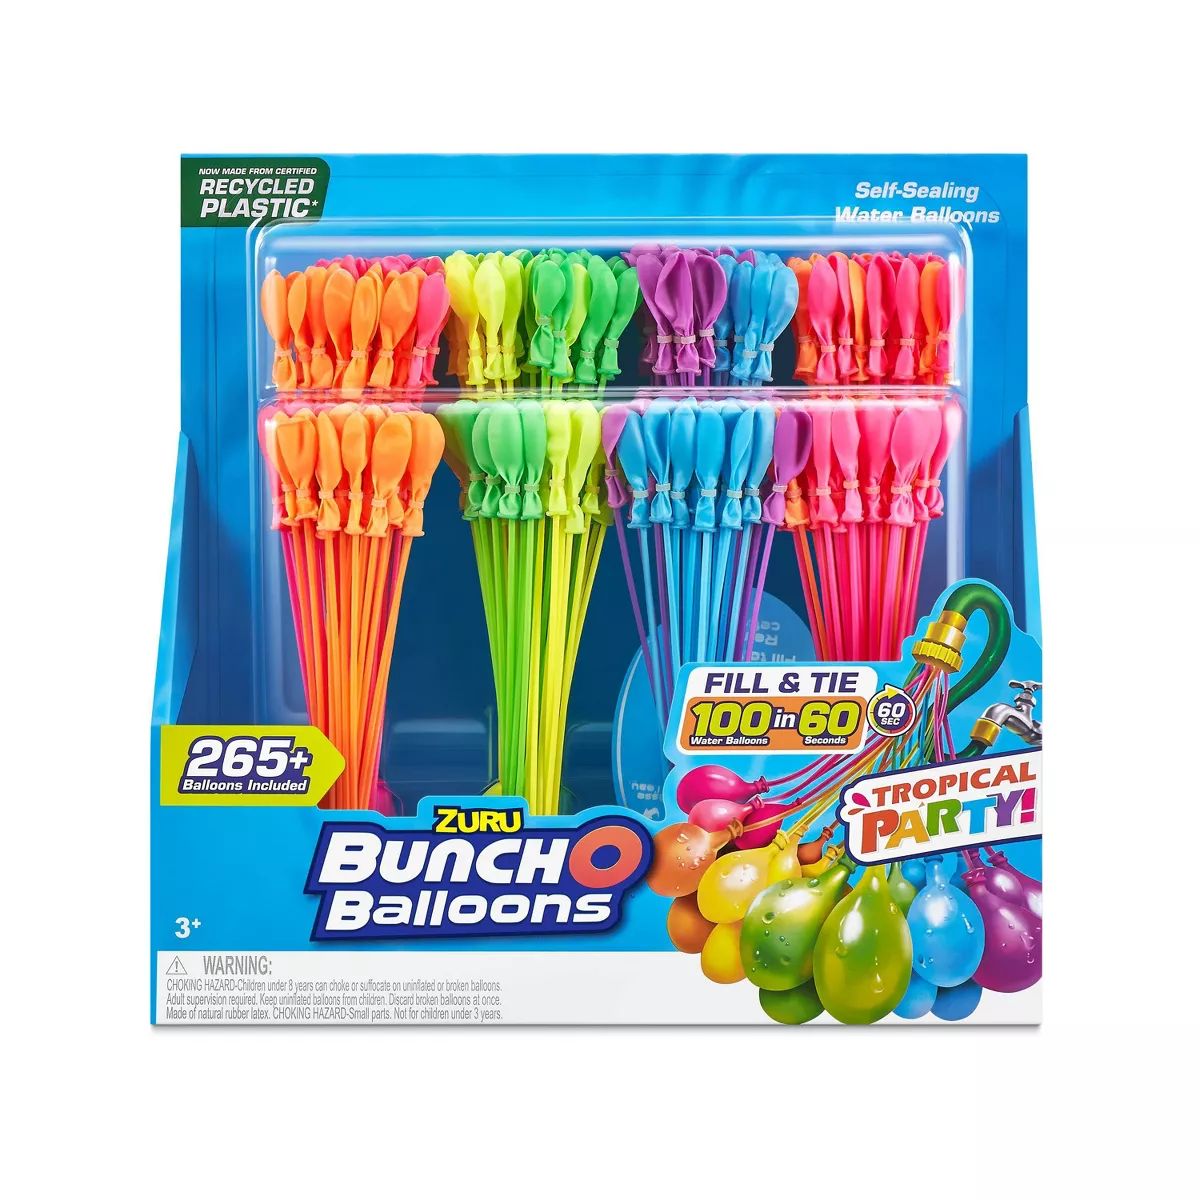 Bunch O Balloons Tropical Party Rapid-Filling Self-Sealing Water Balloons by ZURU - 8pk | Target